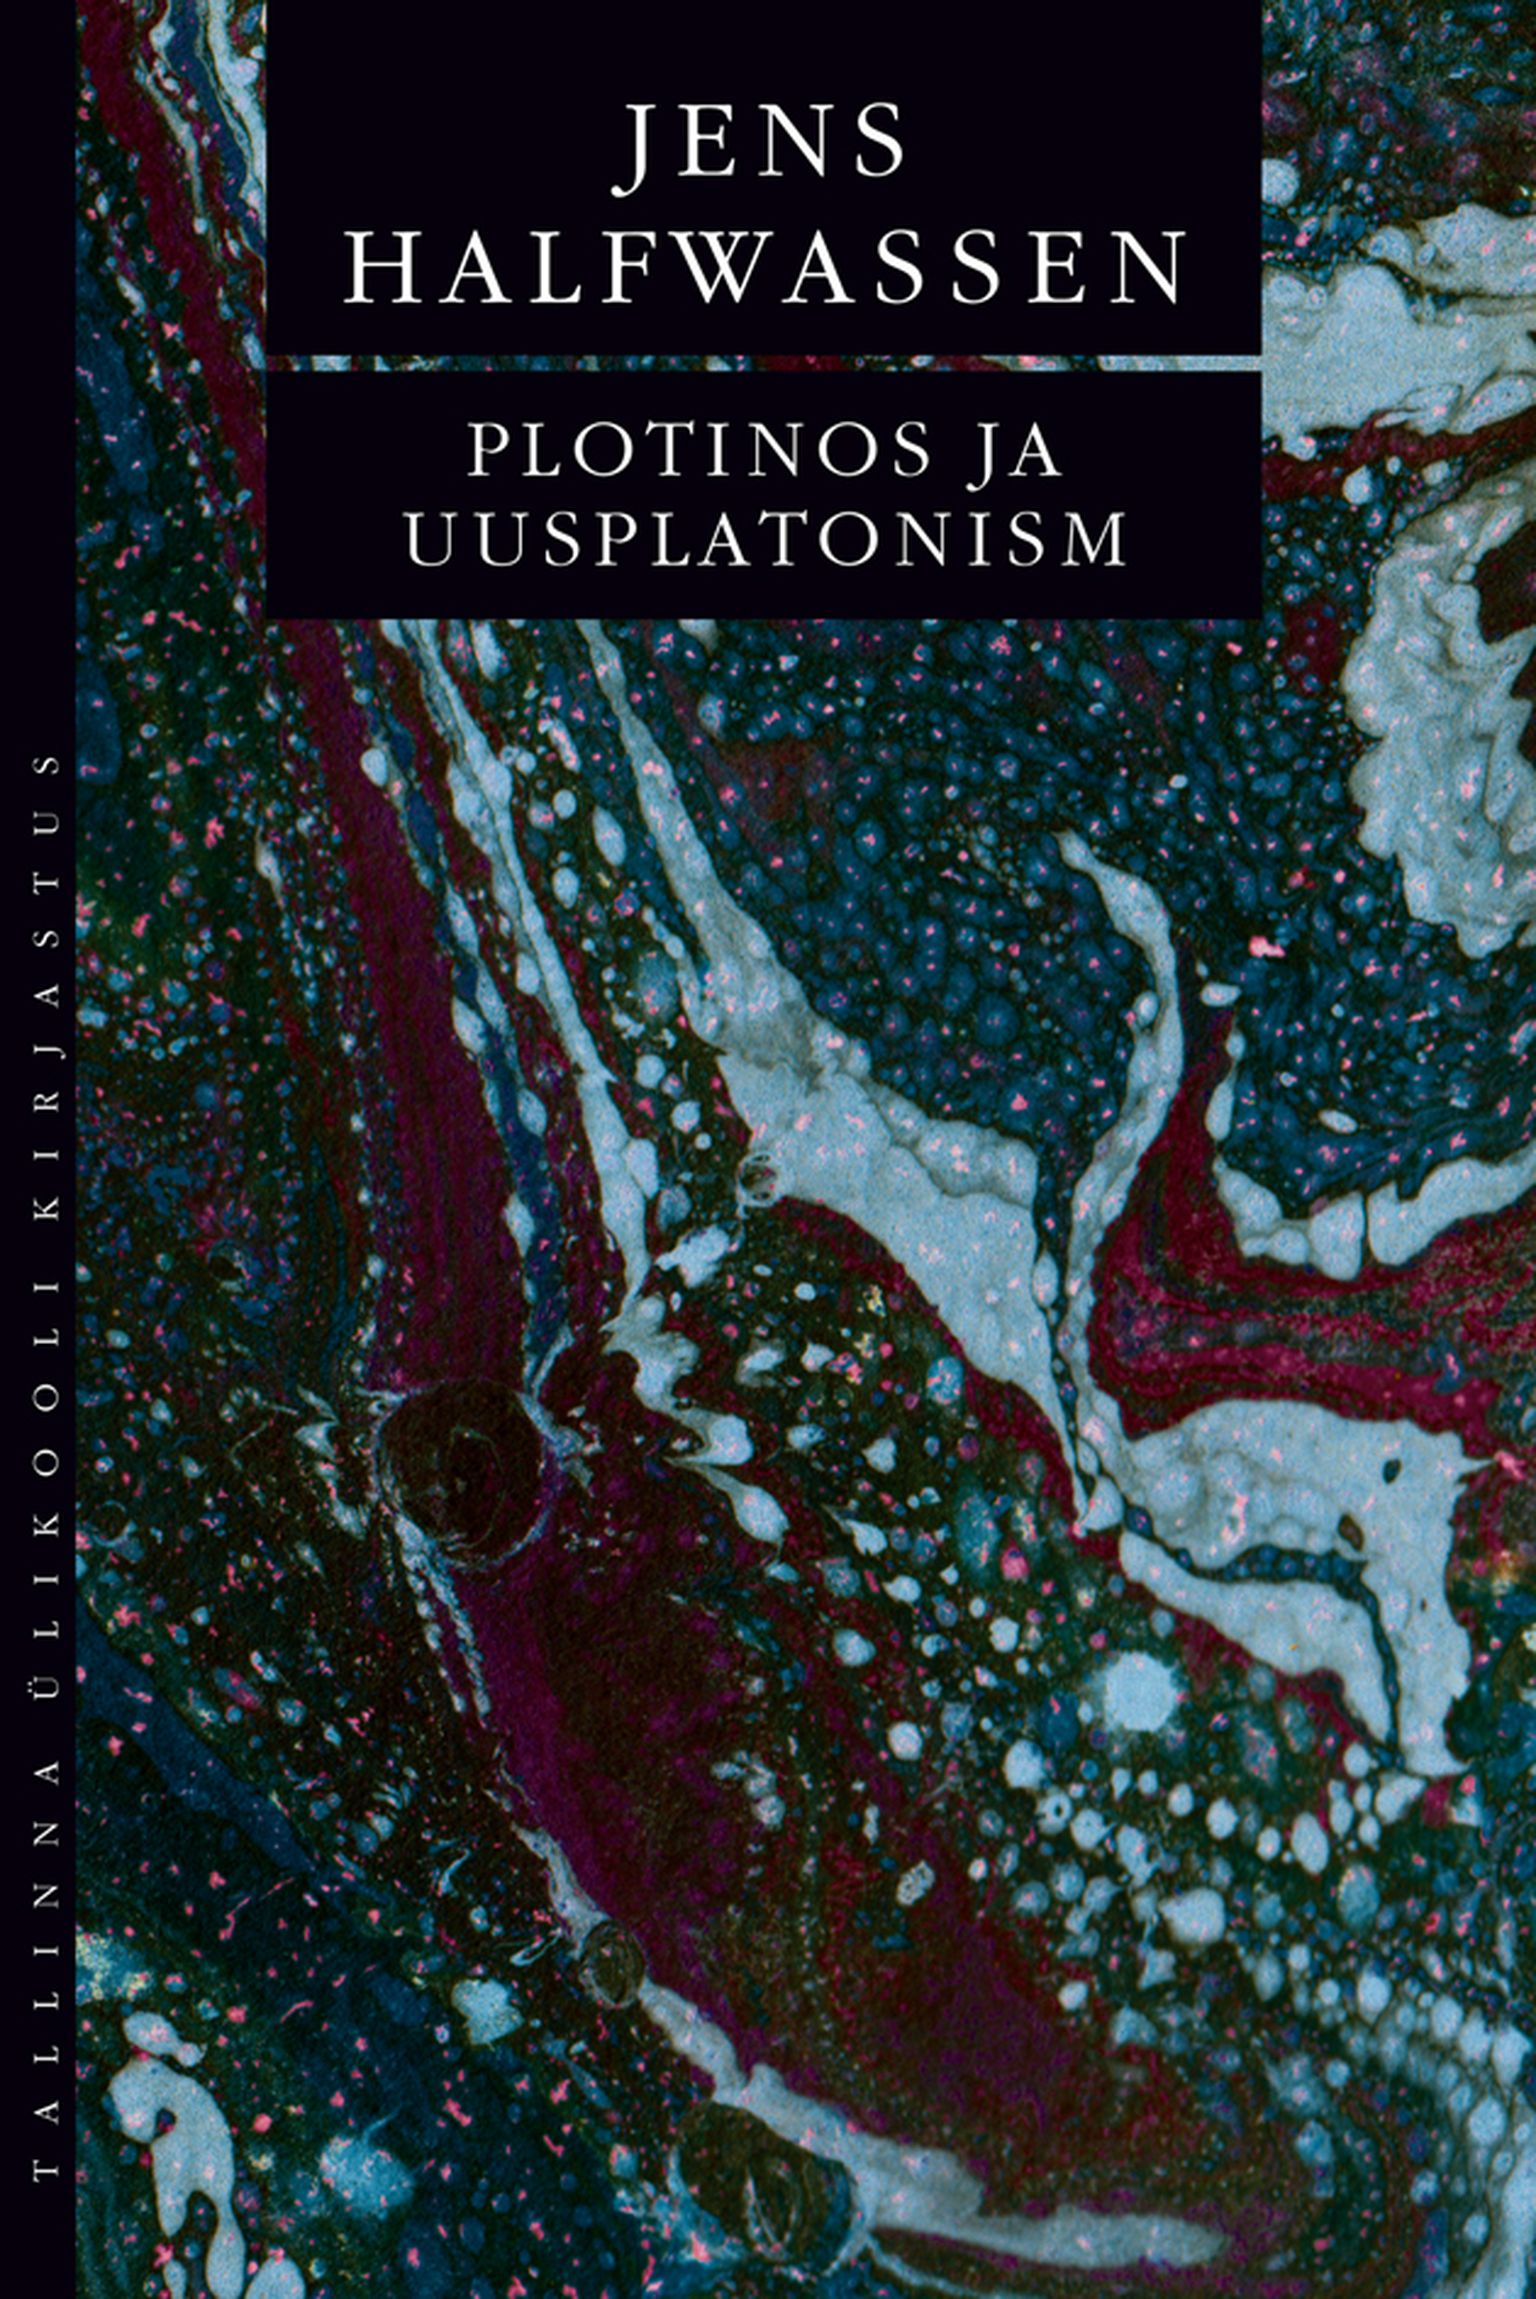 Jens Halfwassen, Plotinos ja uusplatonism